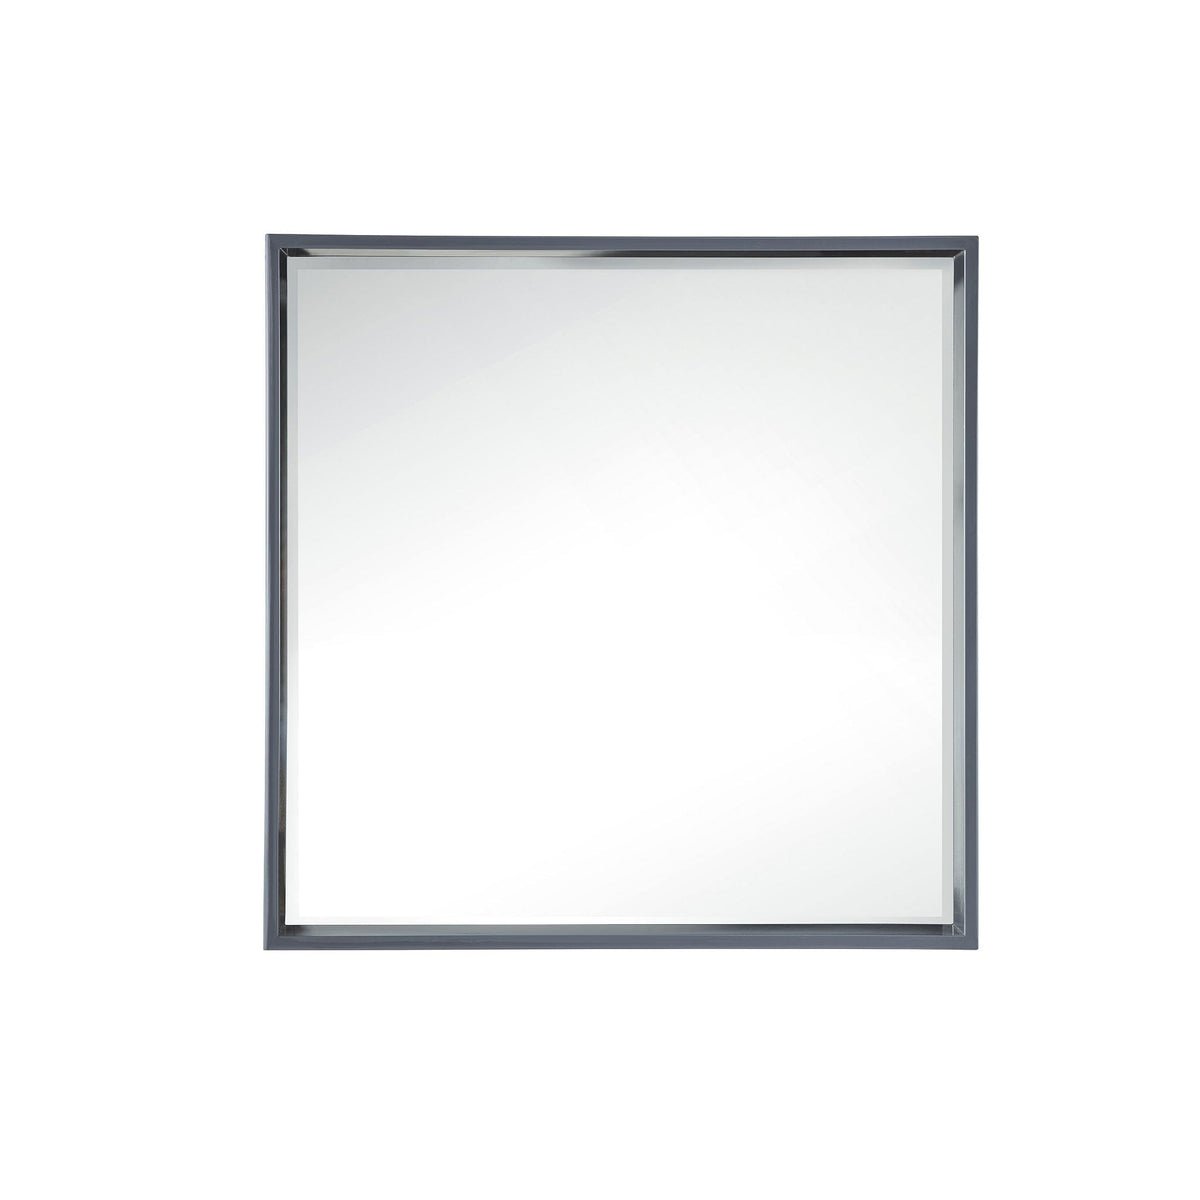 35.4" Milan Square Cube Mirror, Modern Gray Glossy